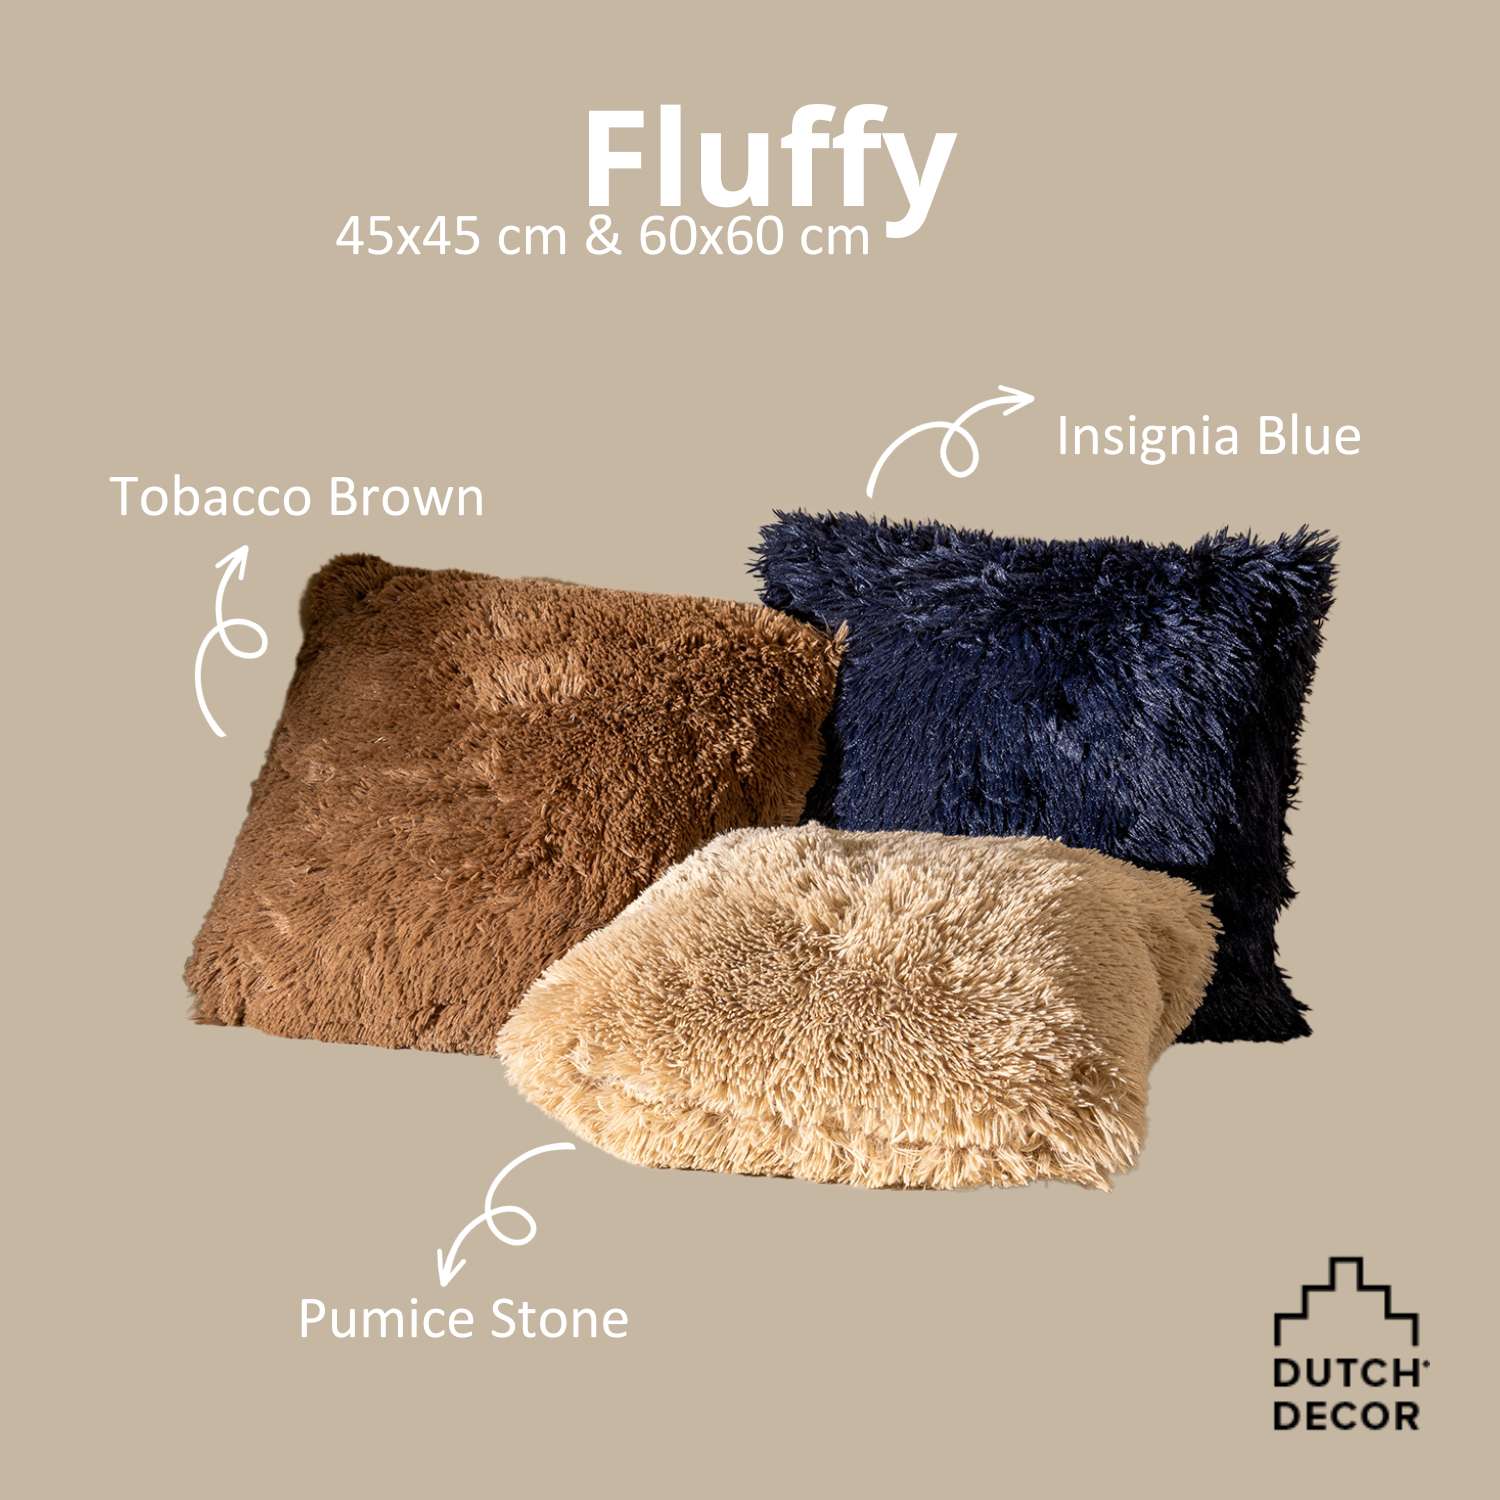 FLUFFY - Kussenhoes 60x60 cm - superzacht - XL kussensloop - Pumice Stone - beige